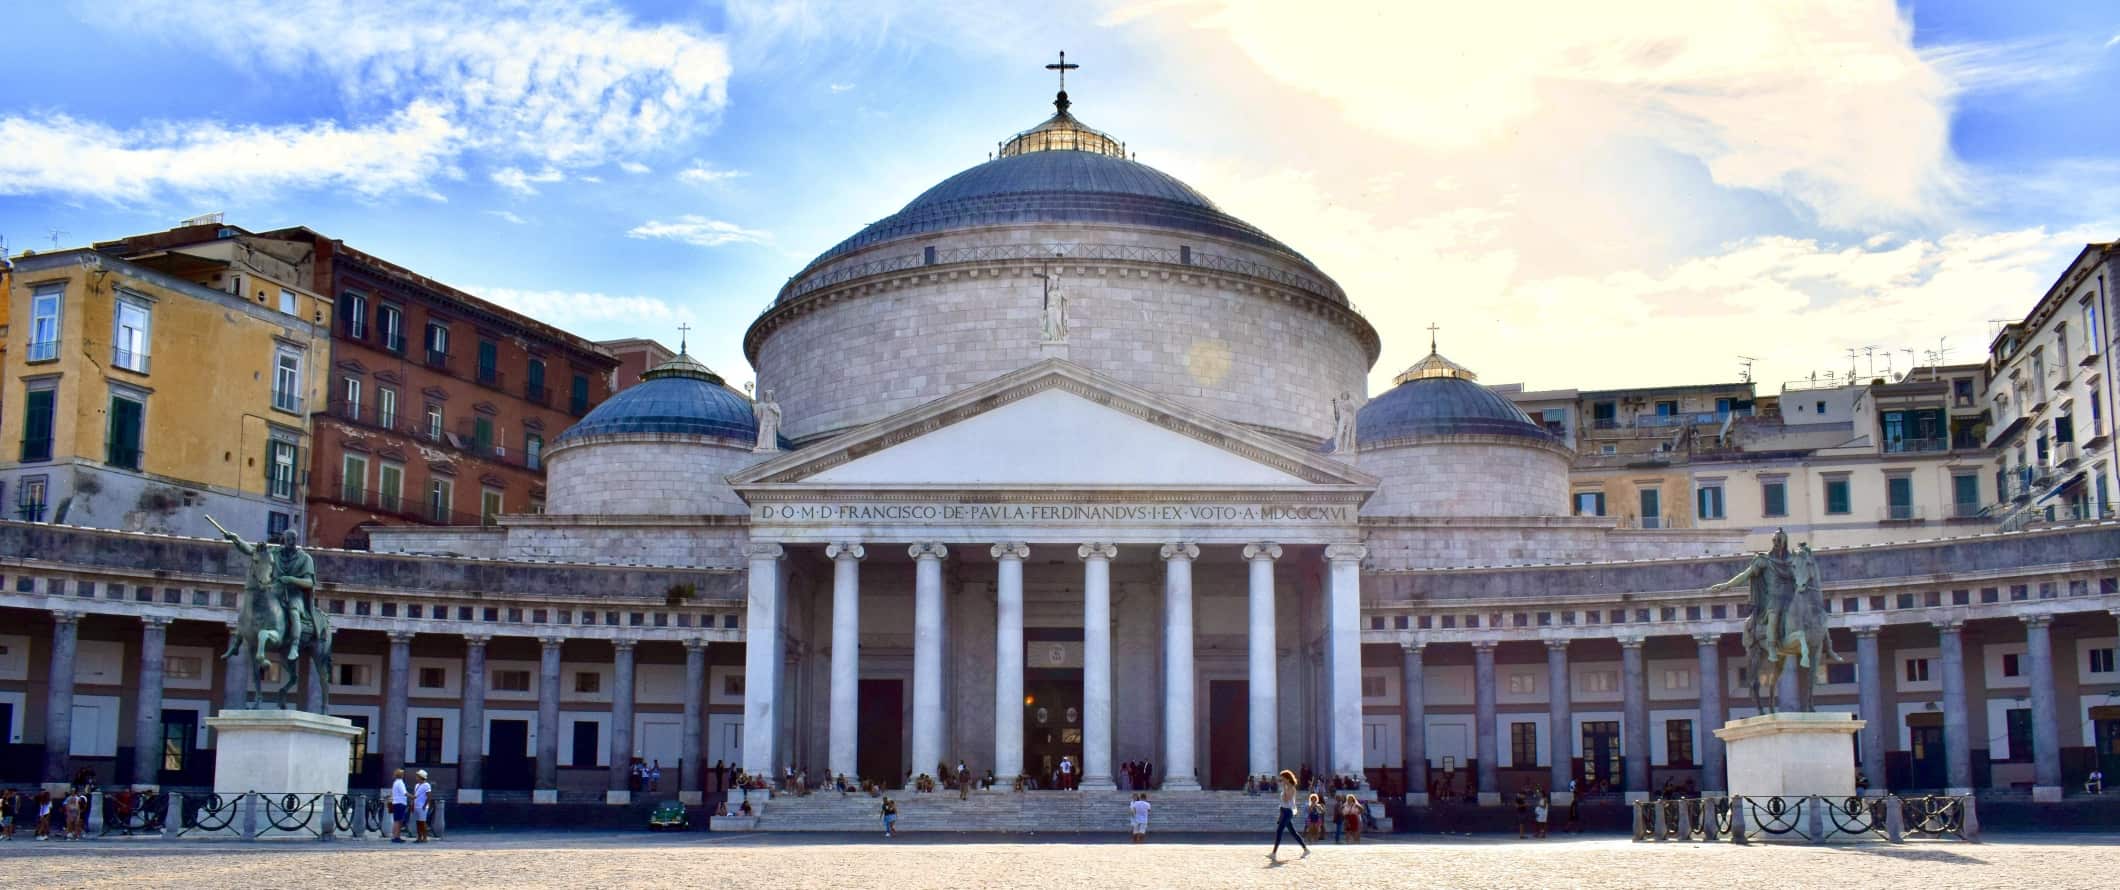 Basílica San Franchyko di Paola na praça principal de Nápoles, Itália.